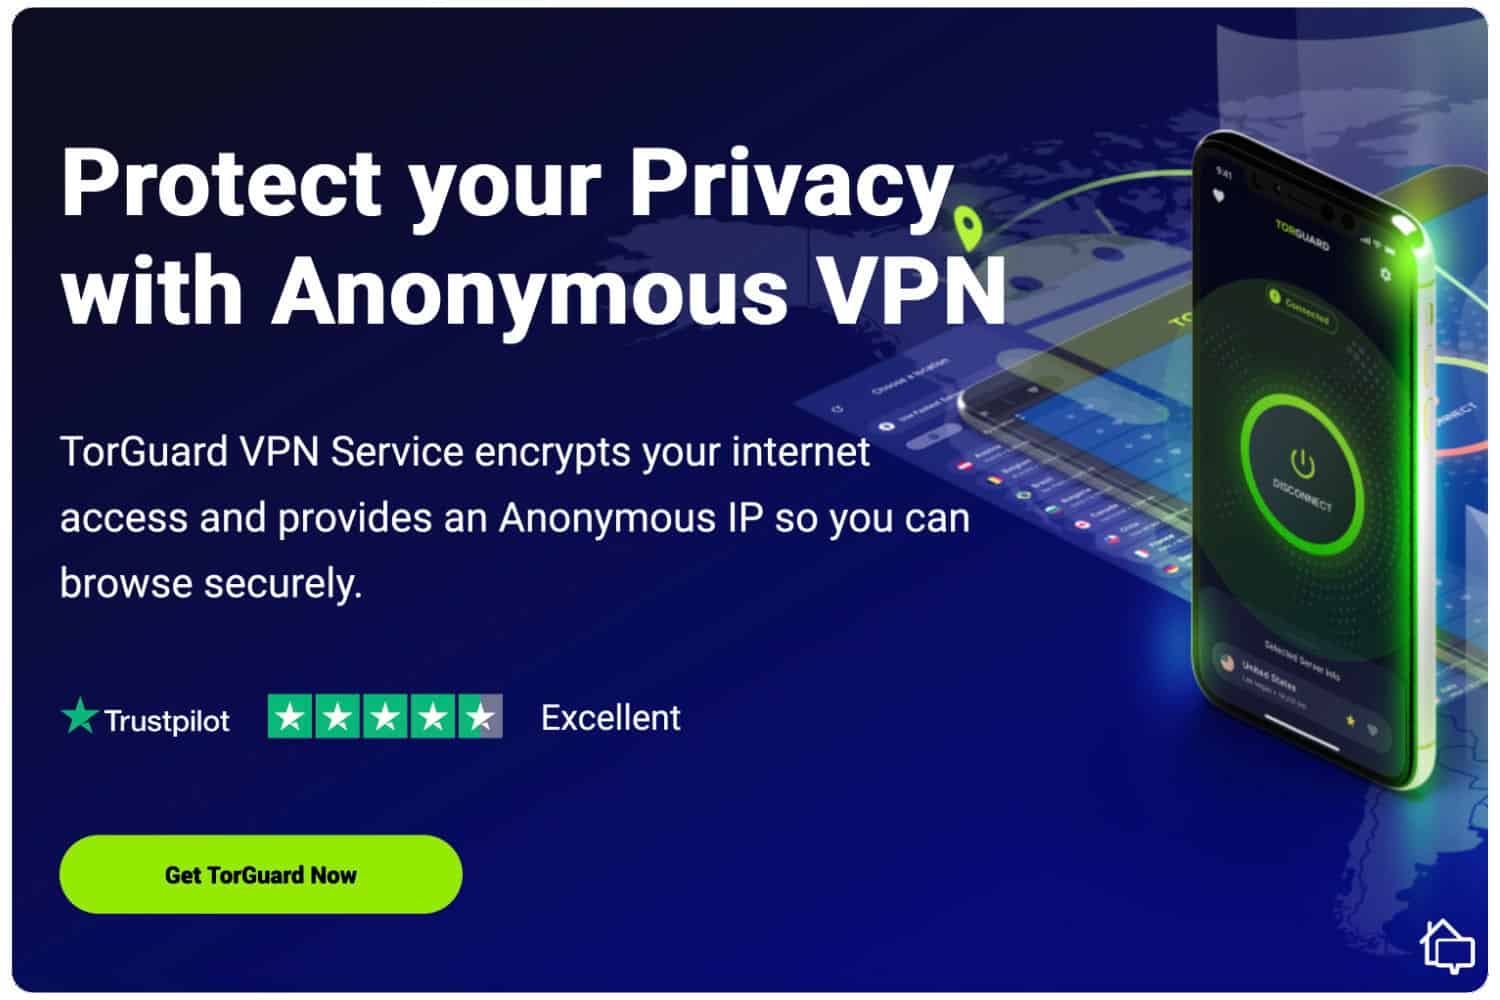 TorGuard VPN takes data privacy very seriously.